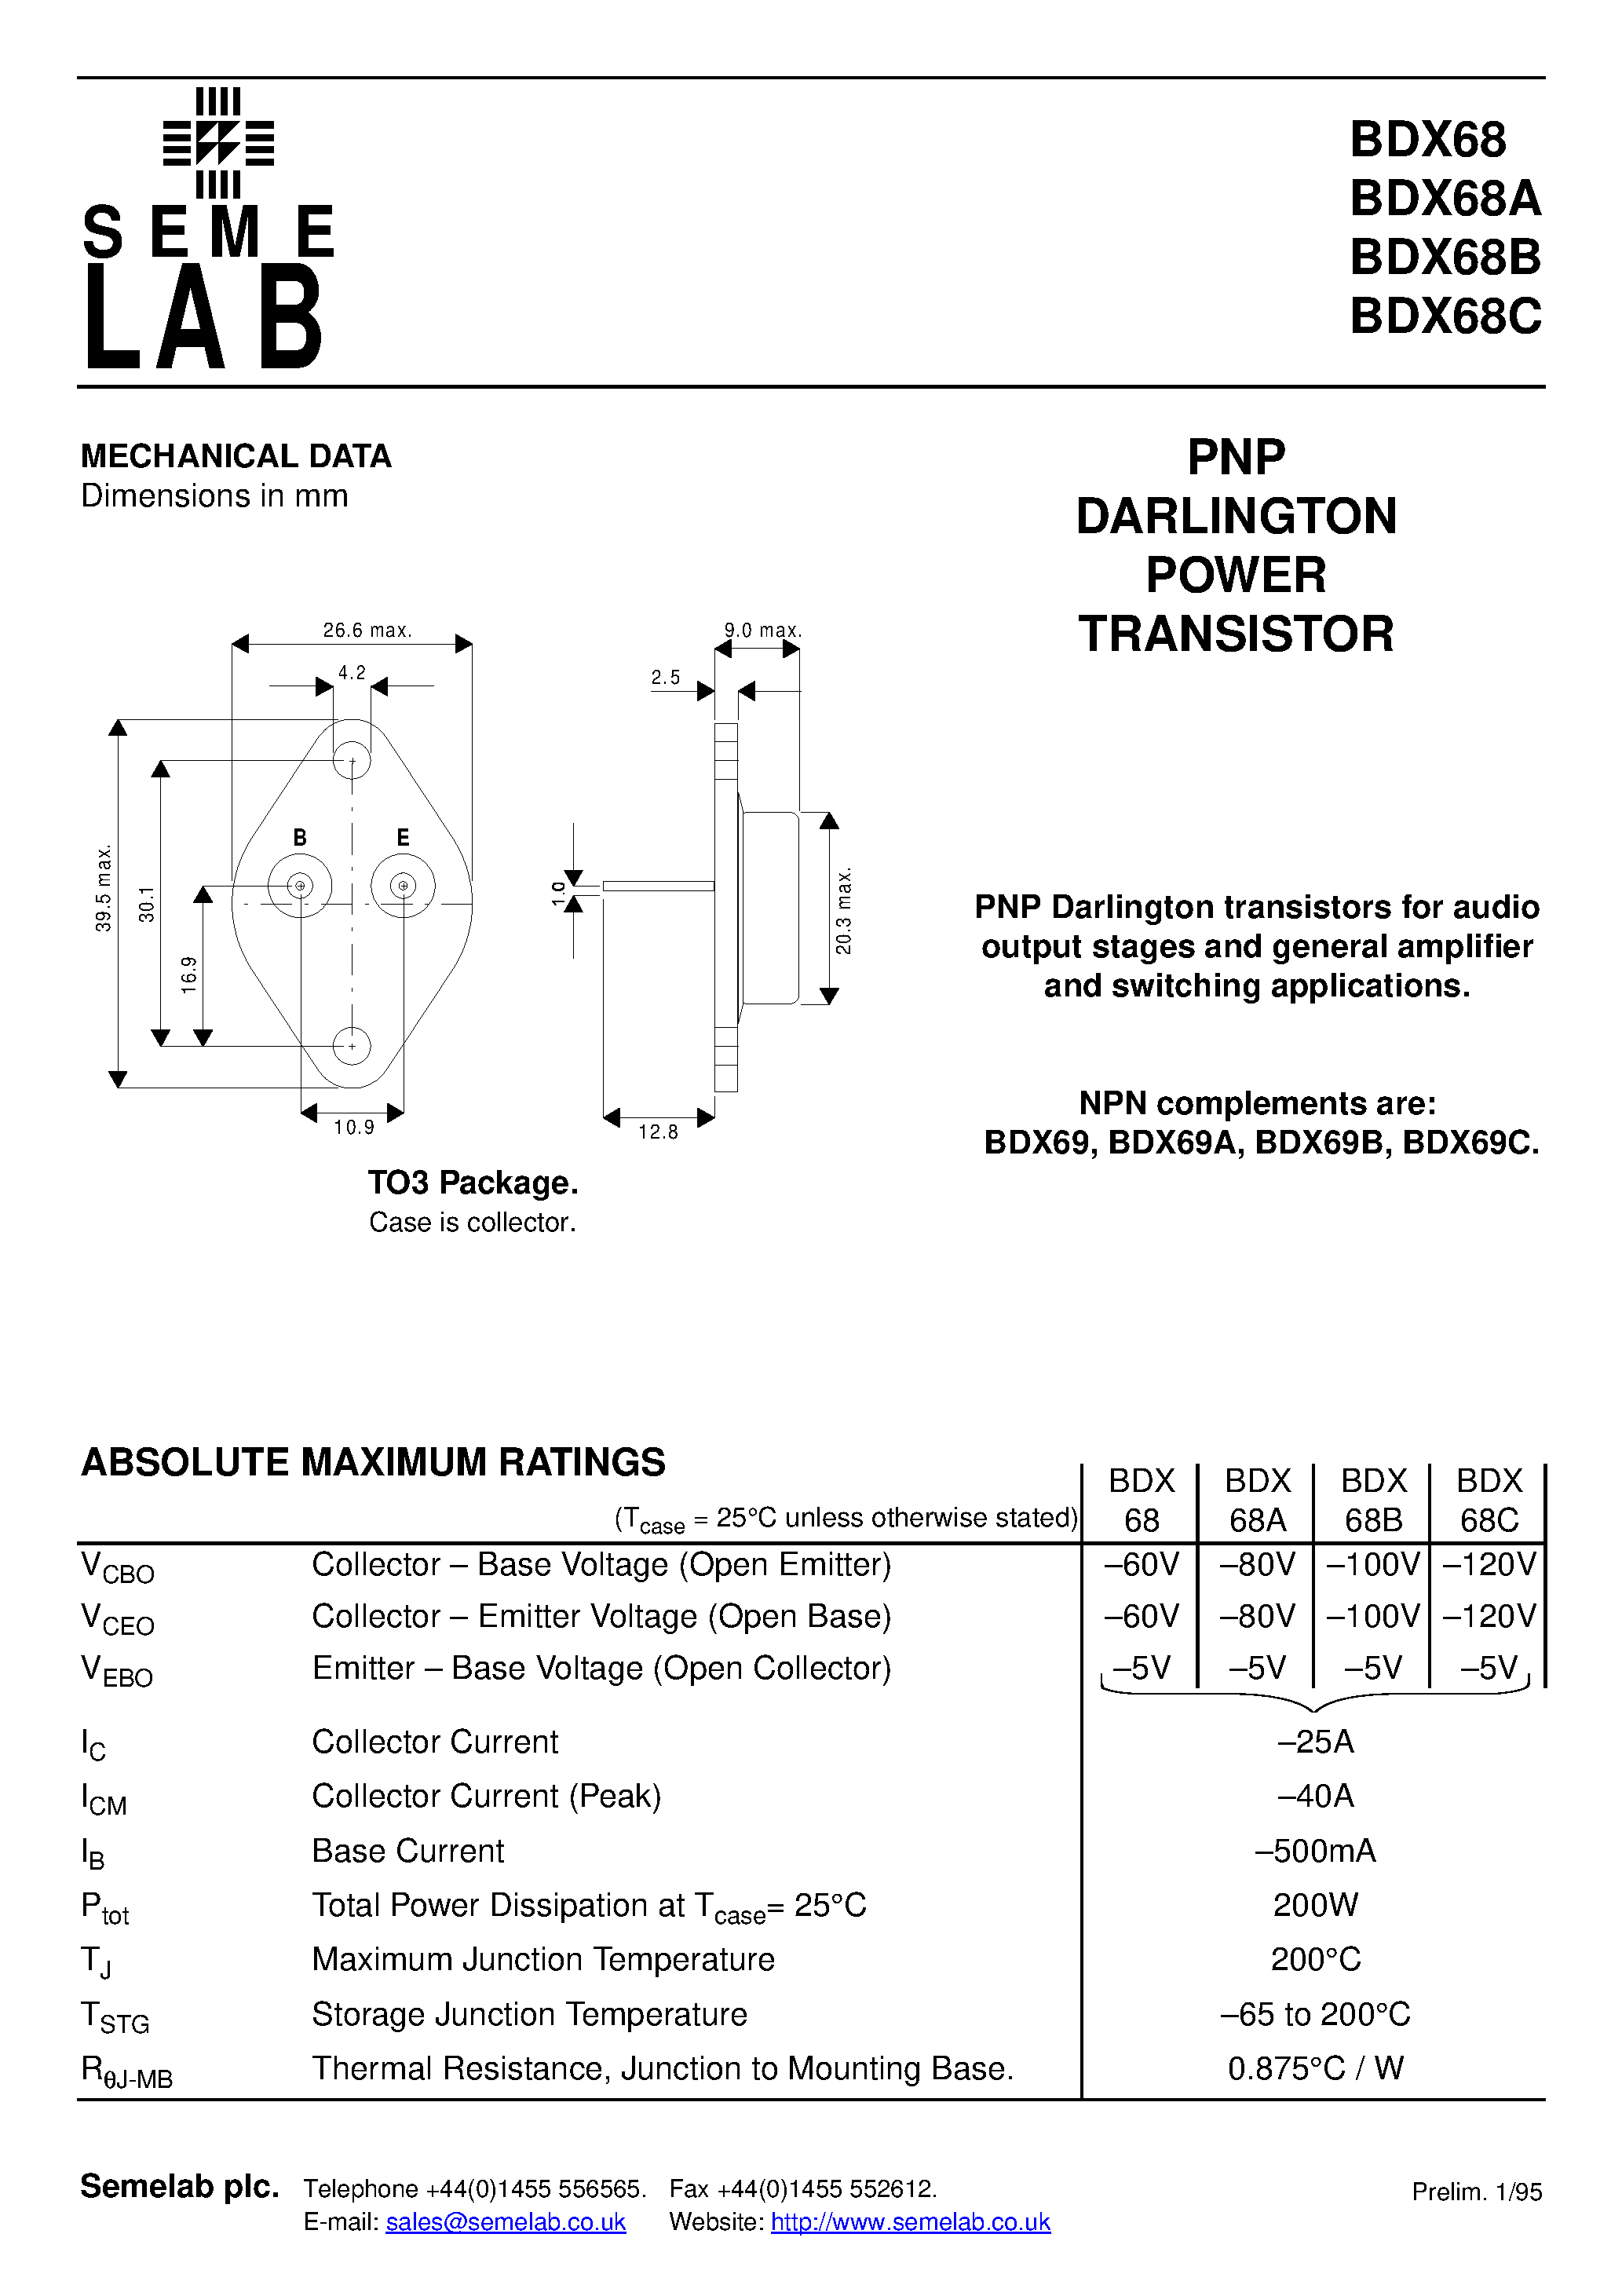 Datasheet BDX68C - PNP DARLINGTON POWER TRANSISTOR page 1